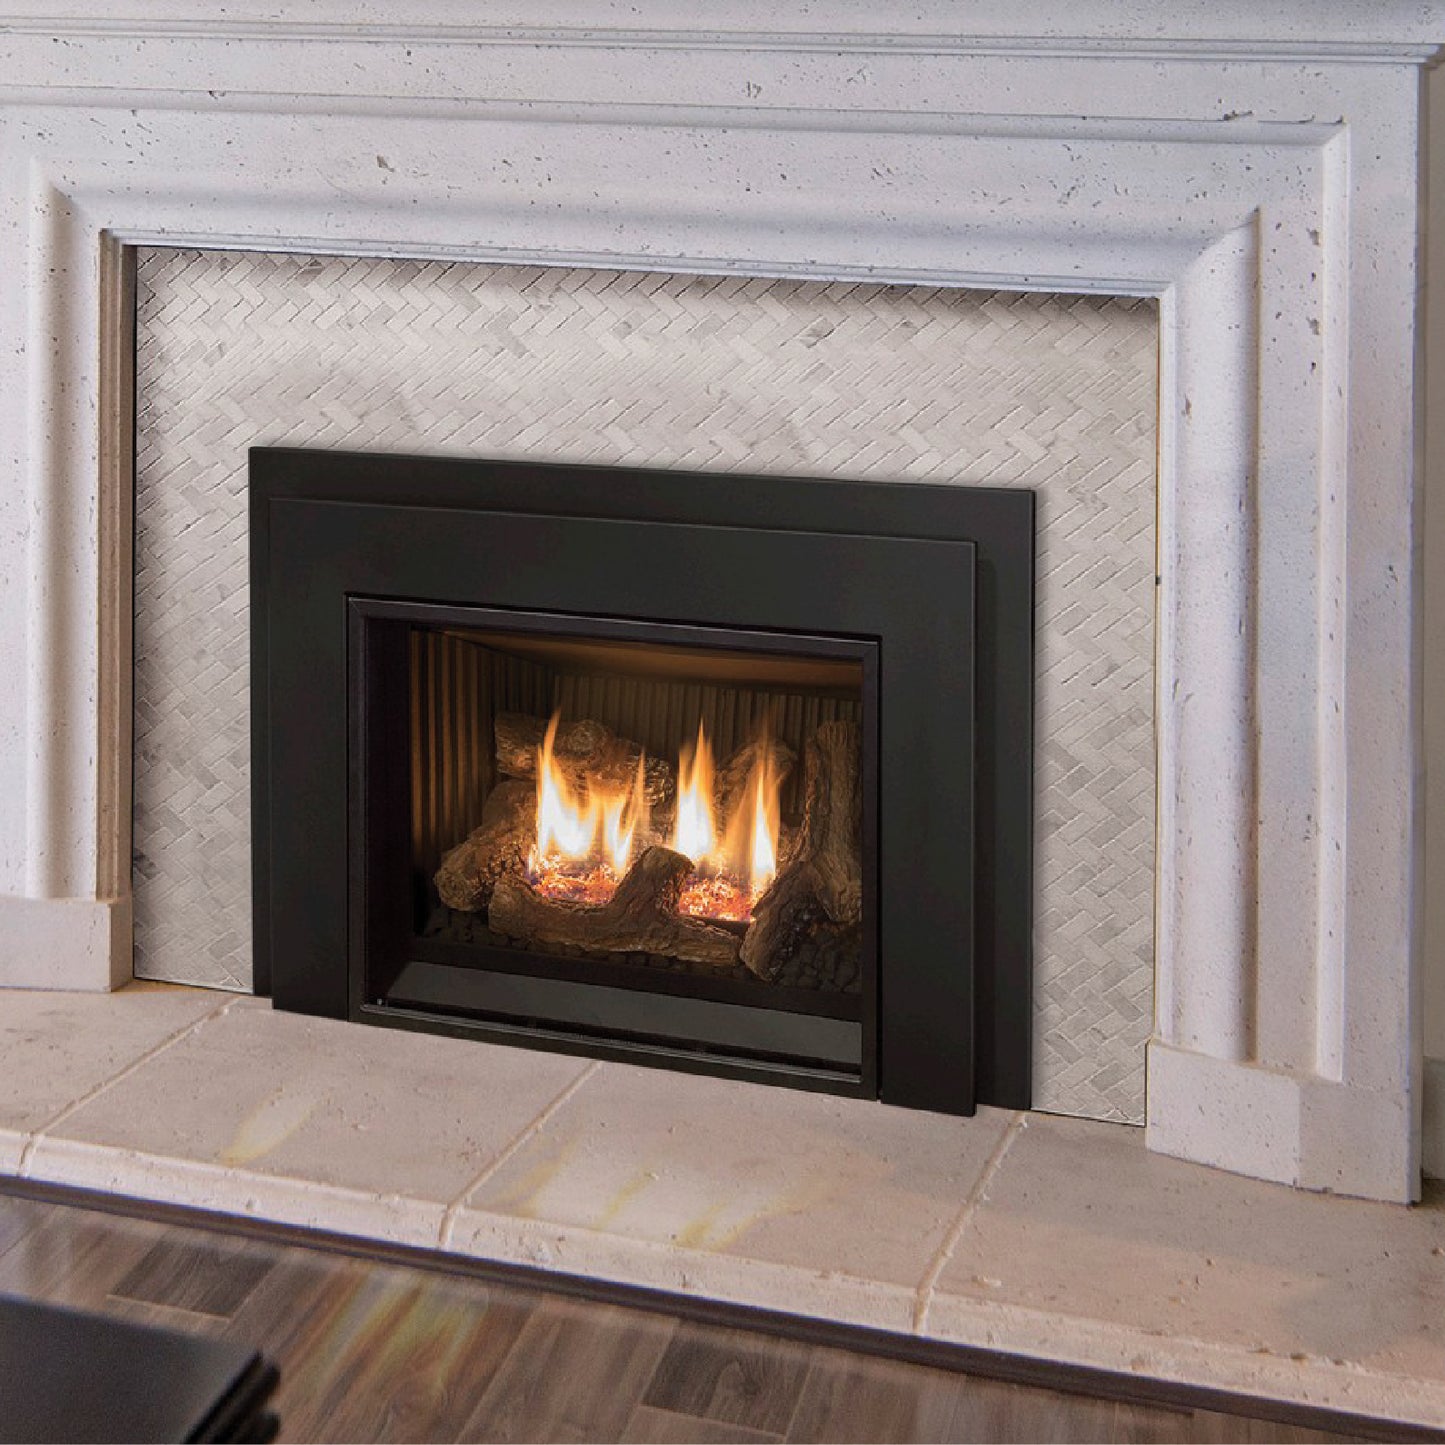 Enviro E Series Gas or Propane Insert Fireplace